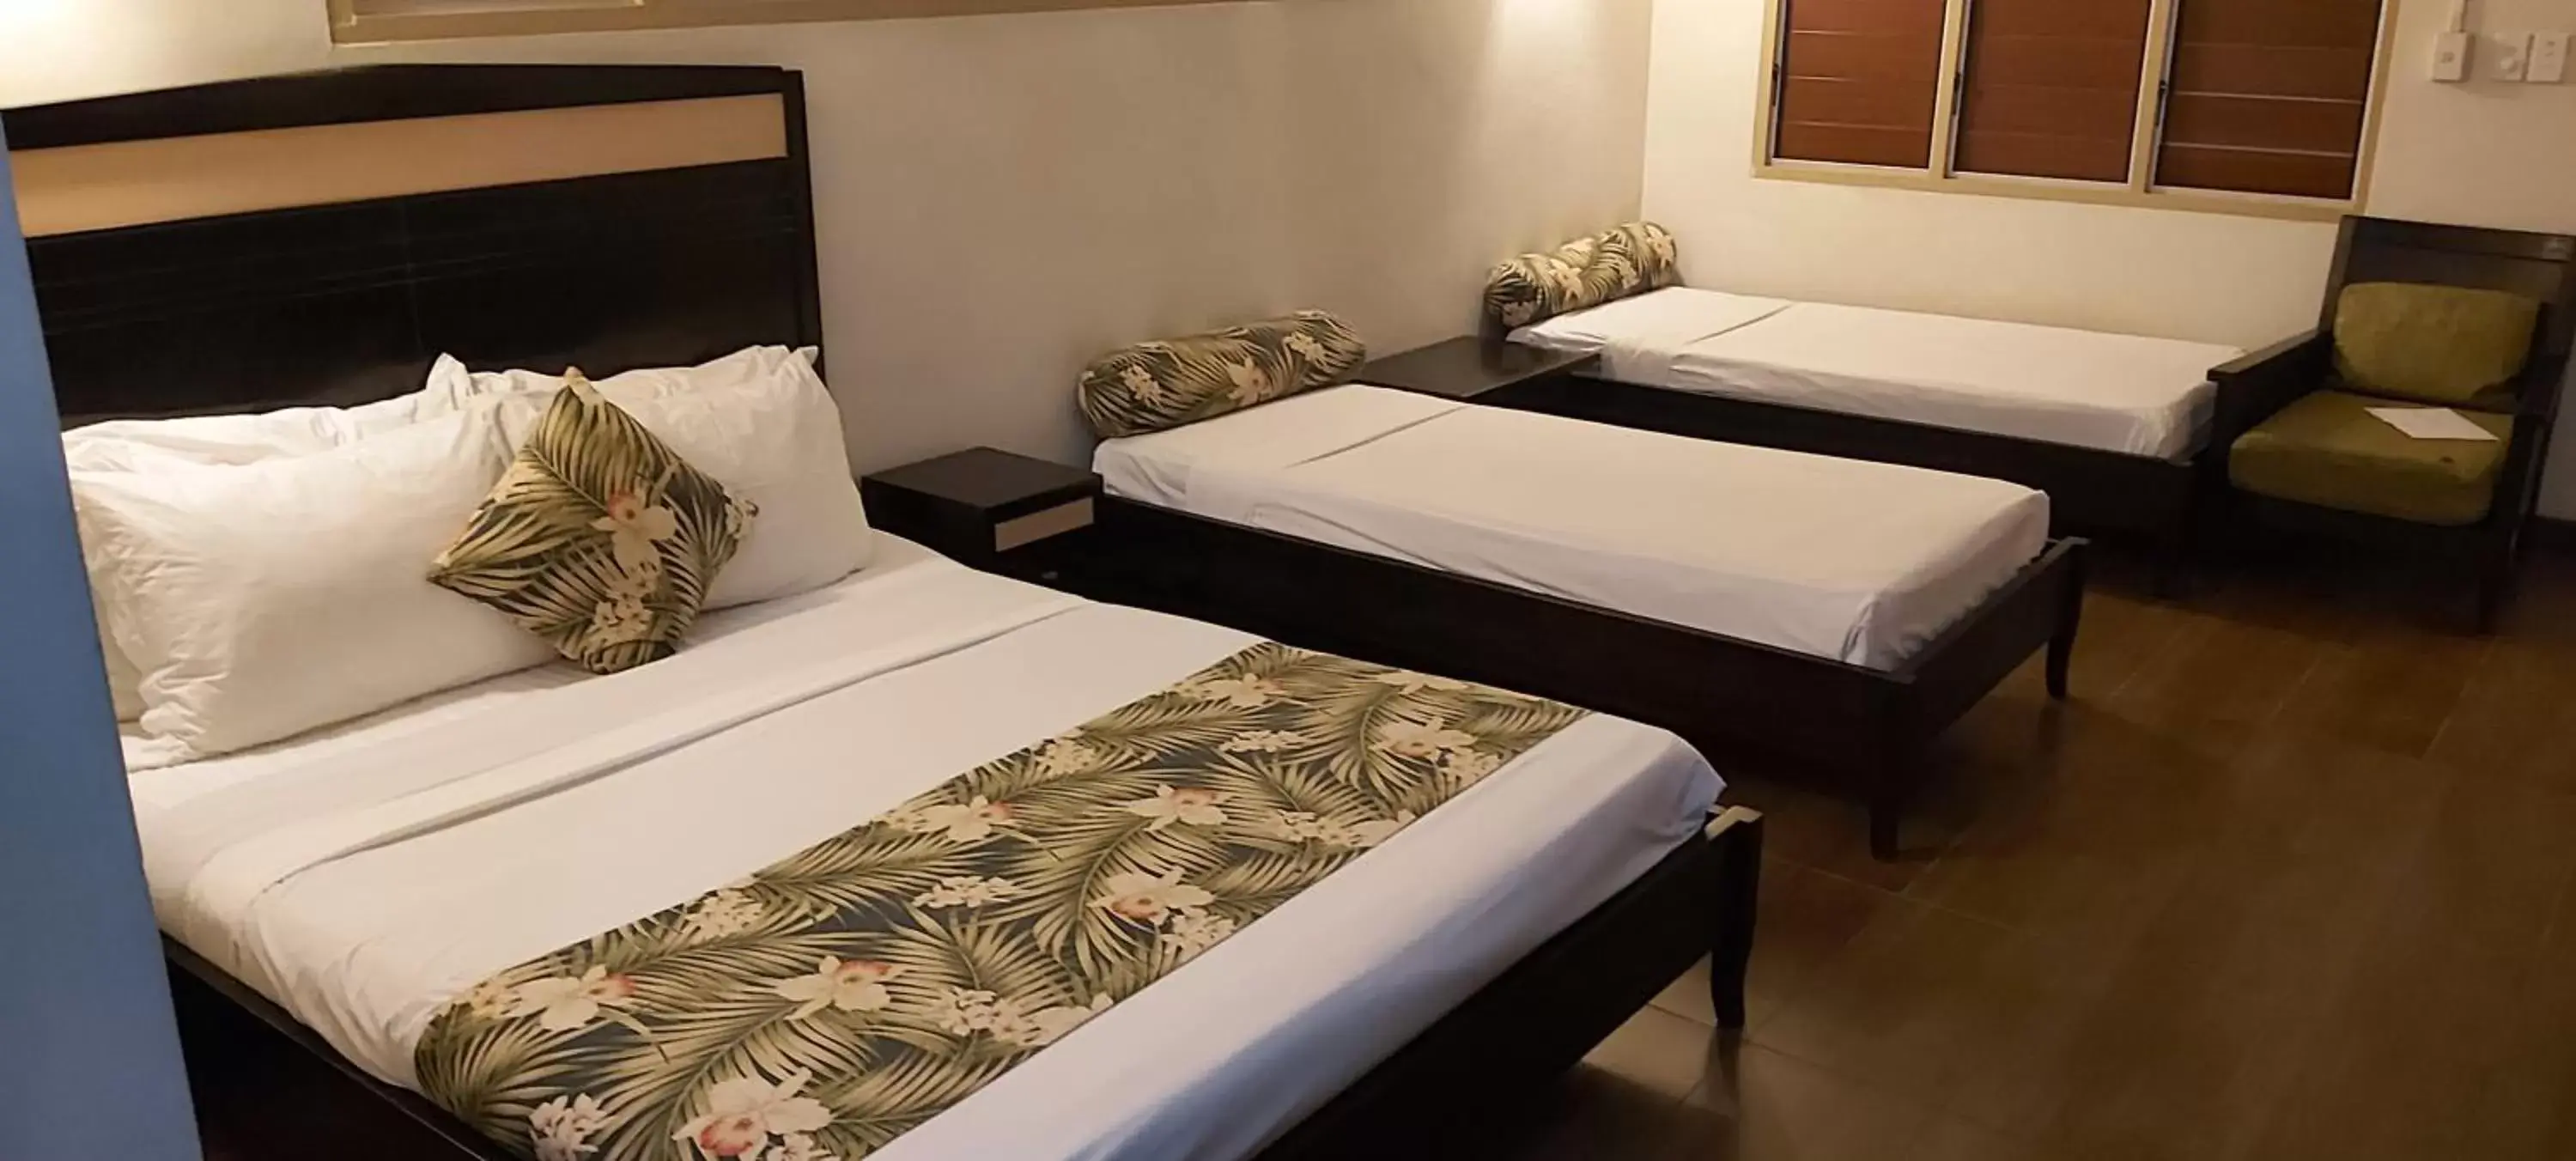 Bed in Tokatoka Resort Hotel